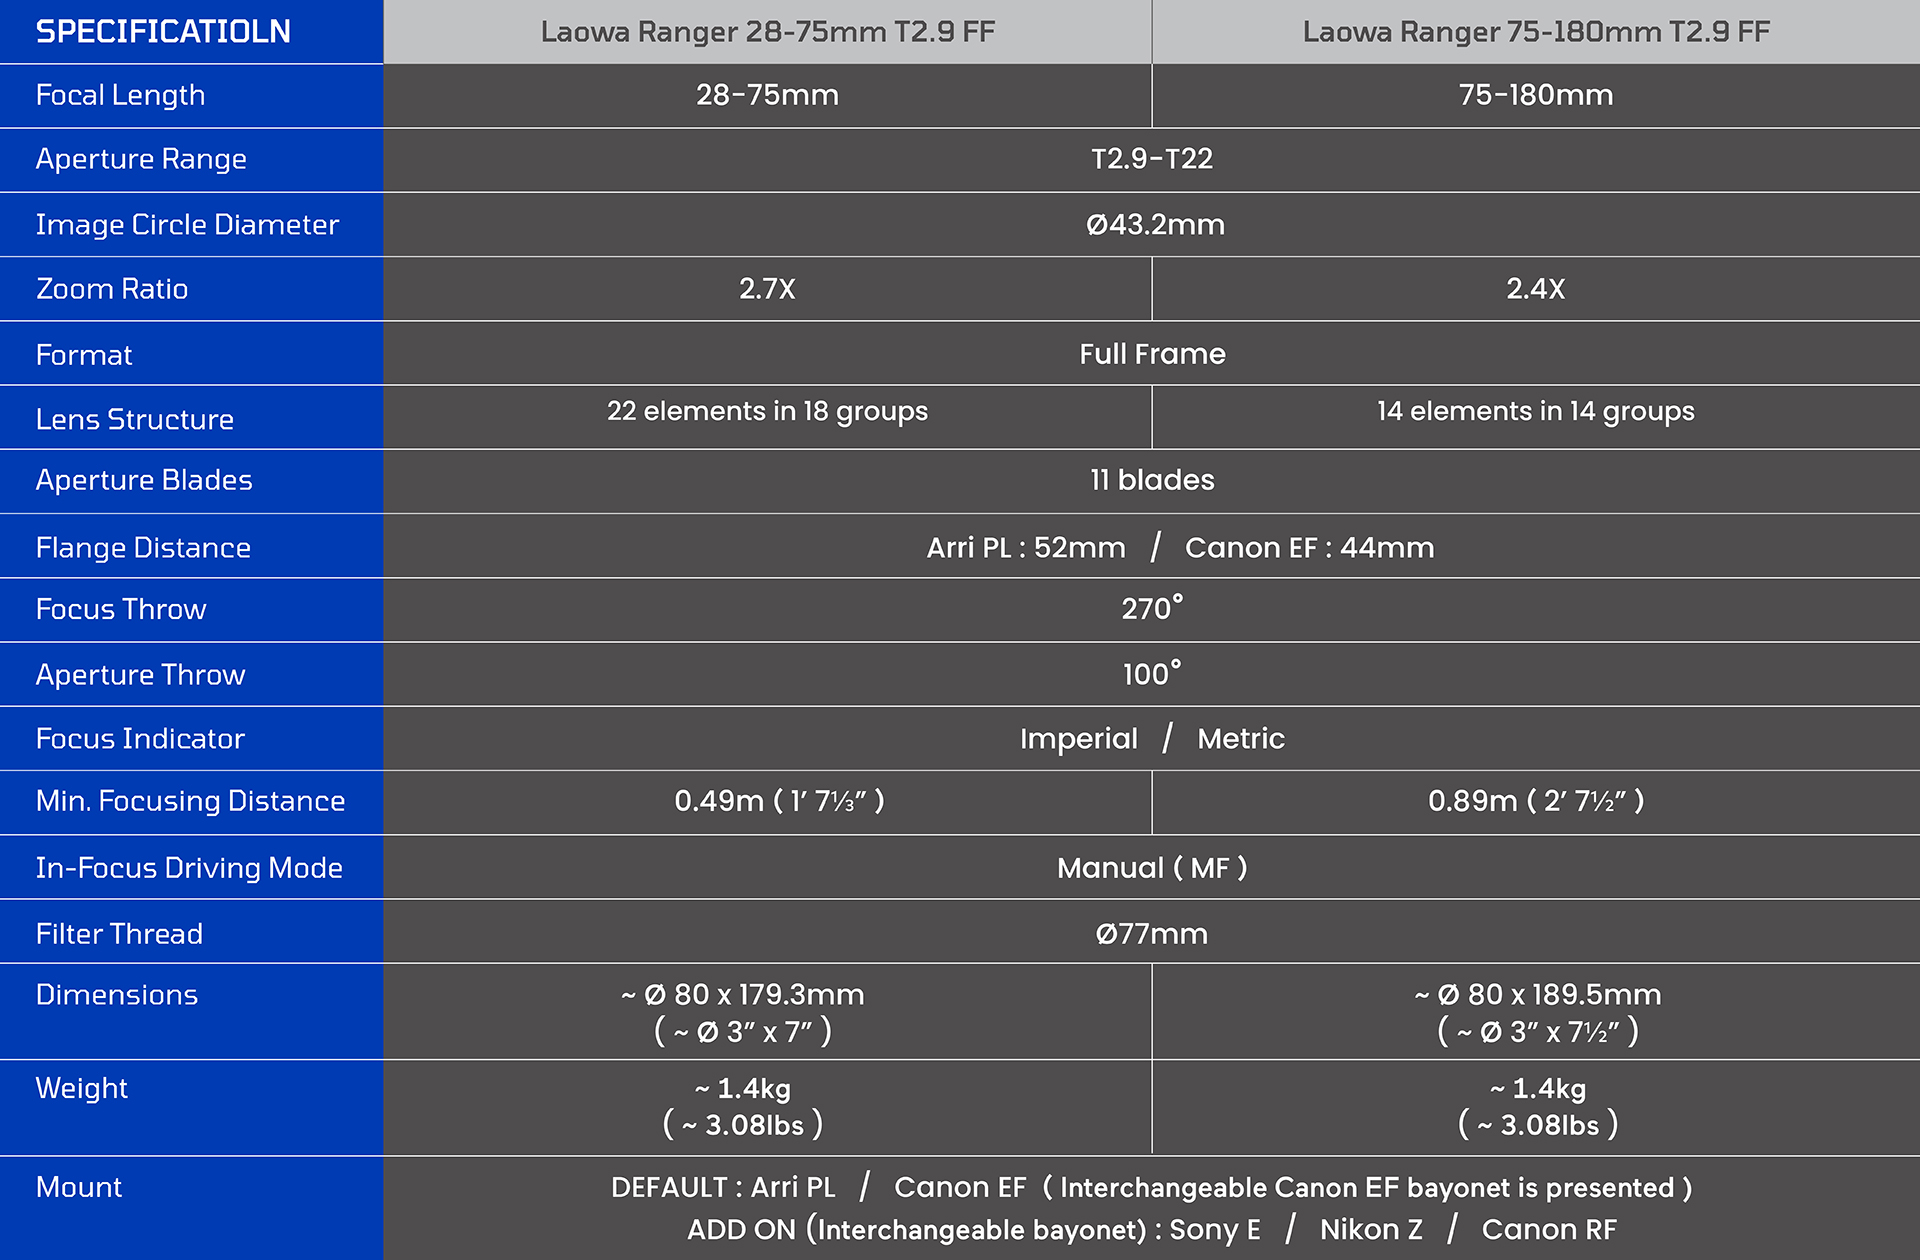 Laowa Ranger 28-75 75-180 lens specifications